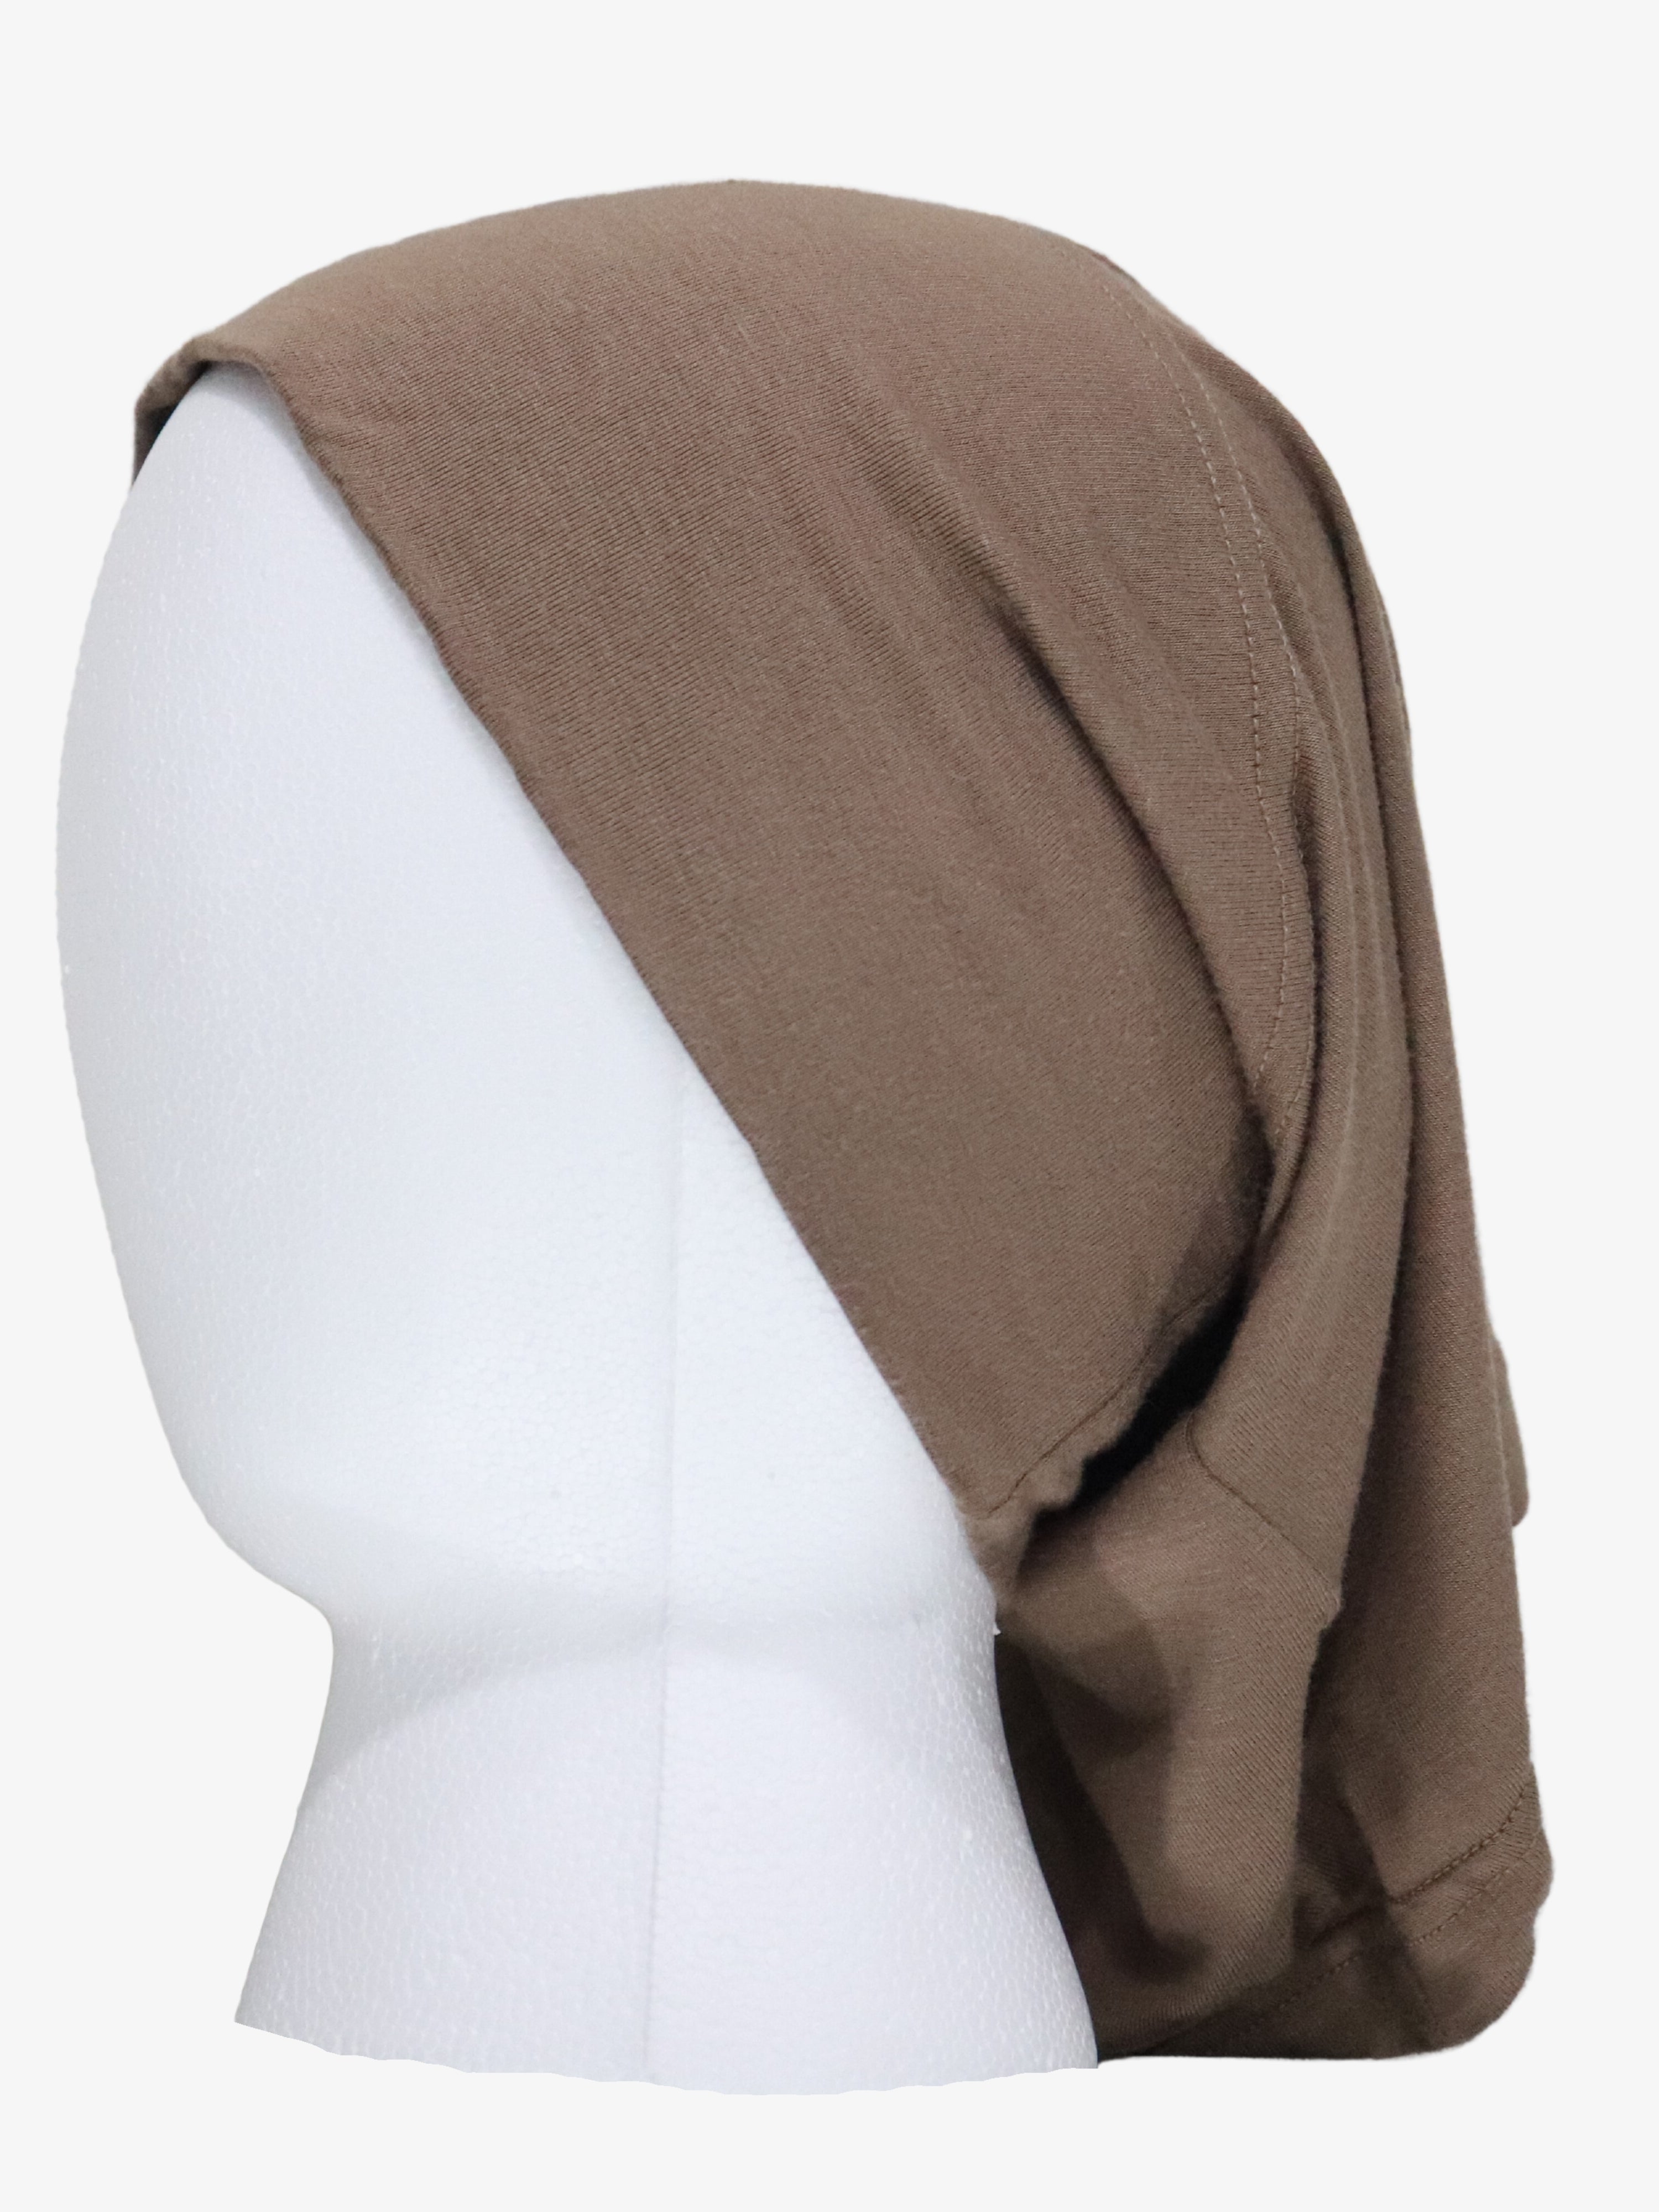 hijab undercap